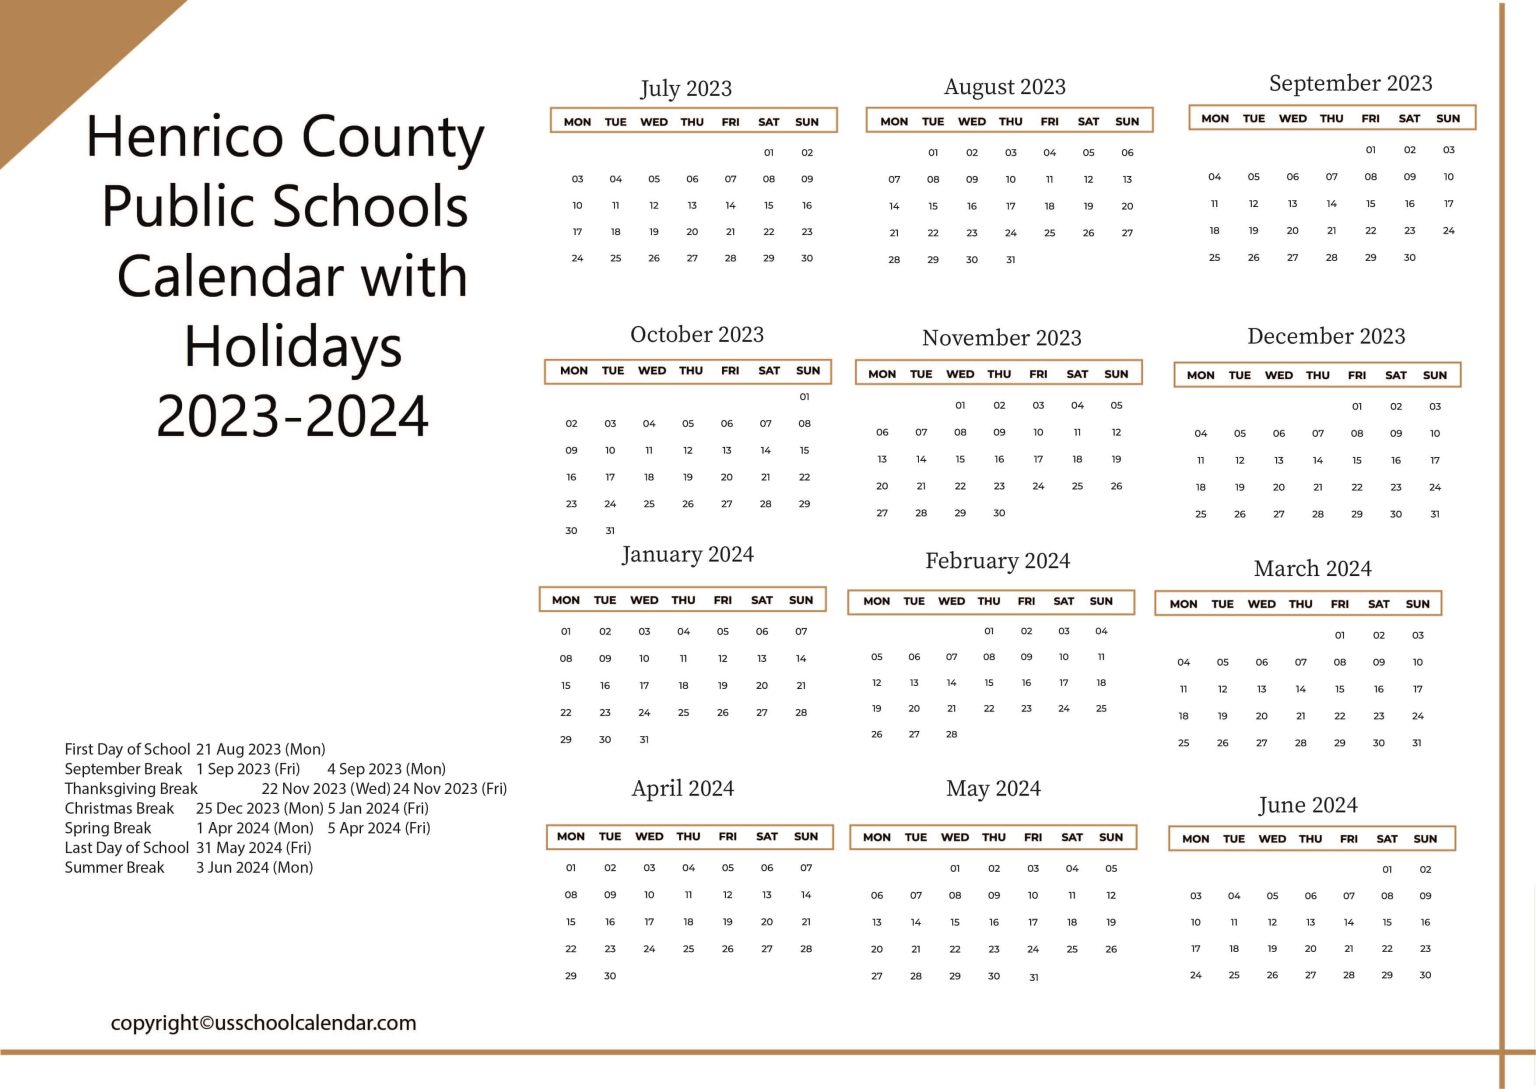 Henrico County Public Schools Calendar with Holidays 20232024